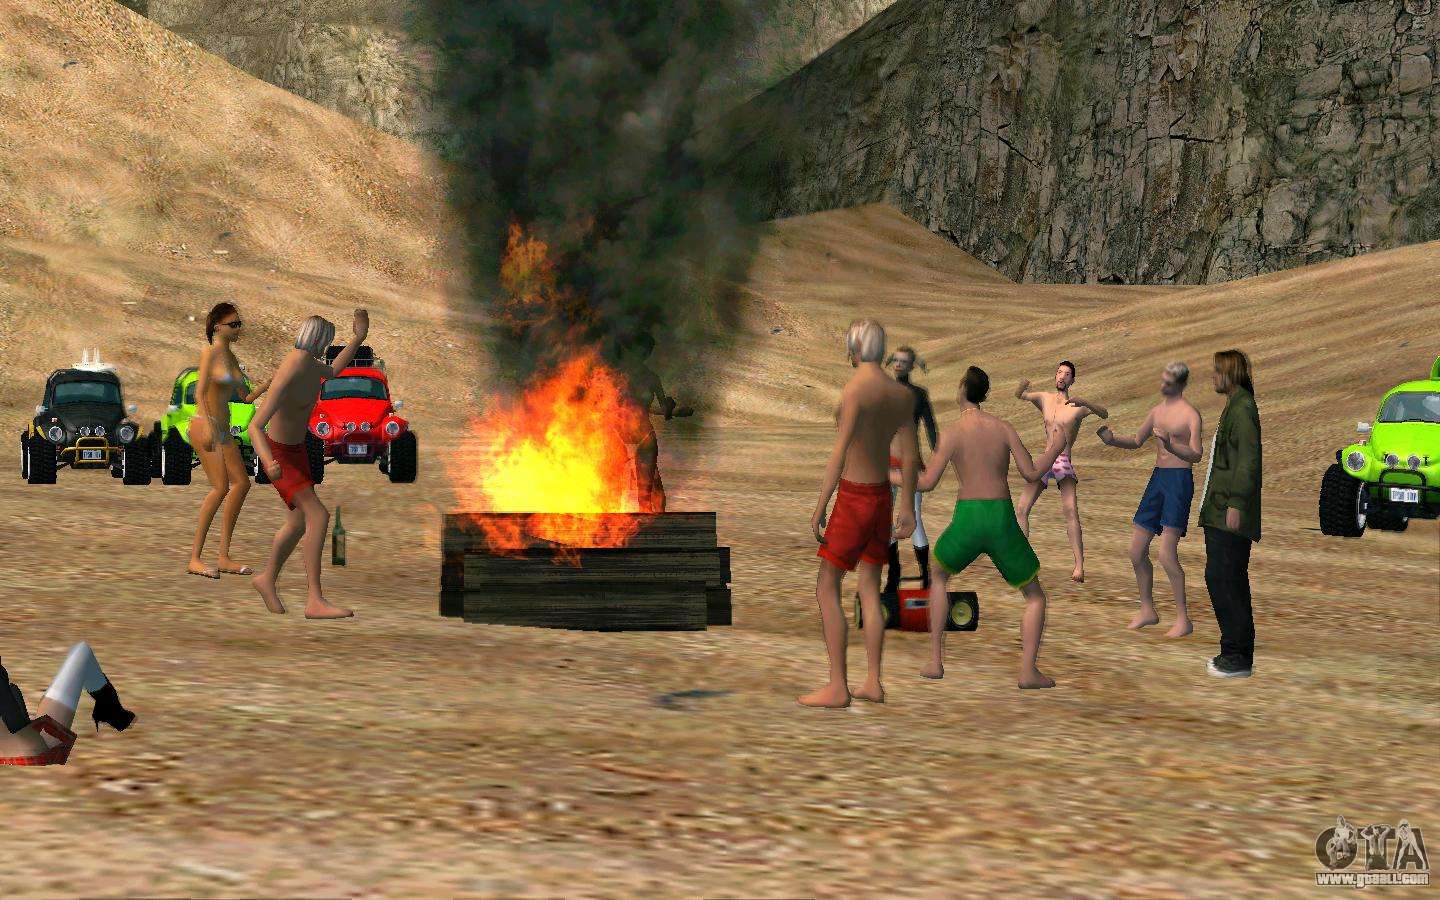 Beach party for GTA San Andreas